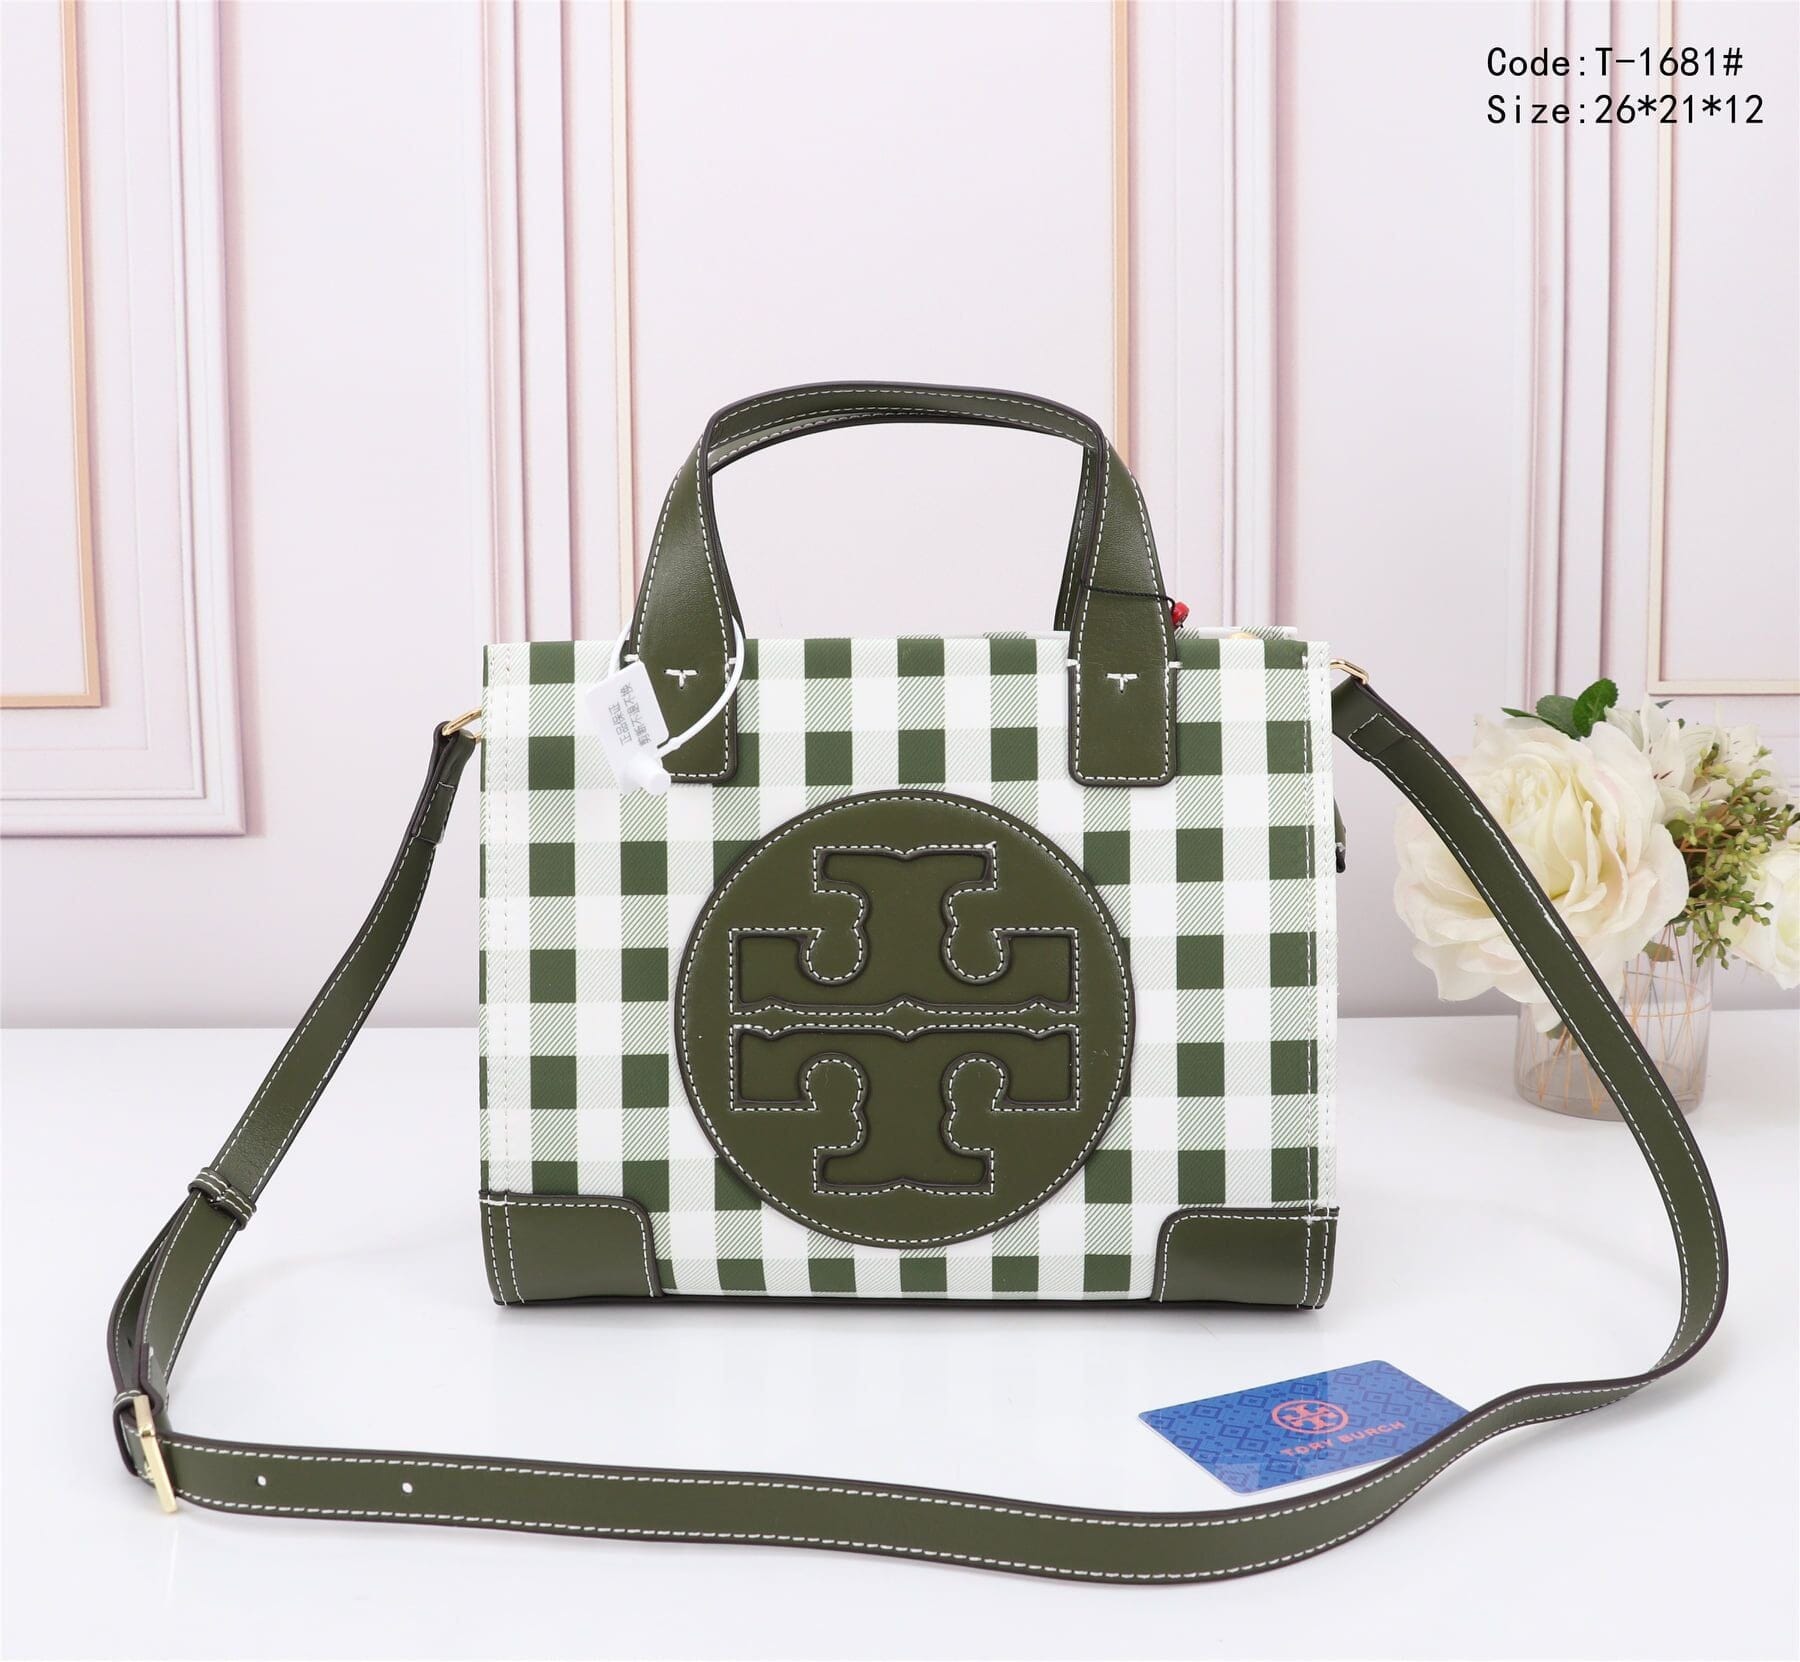 TB1681 Casual Handbag With Sling StyleMoto Green Checkered 